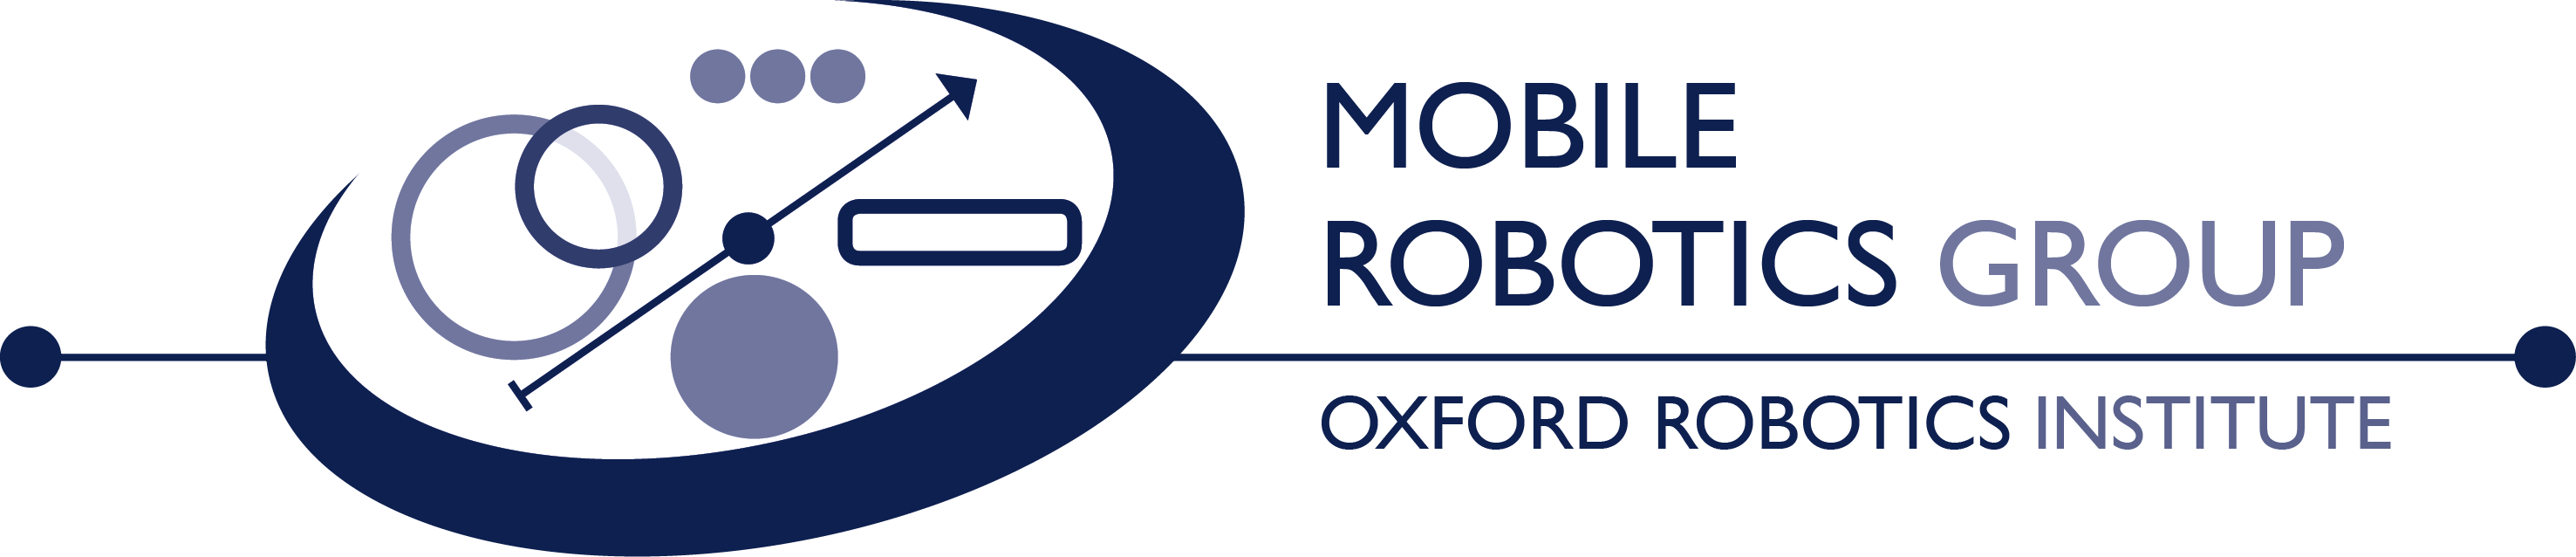 Mobile Robotics Group Logo.